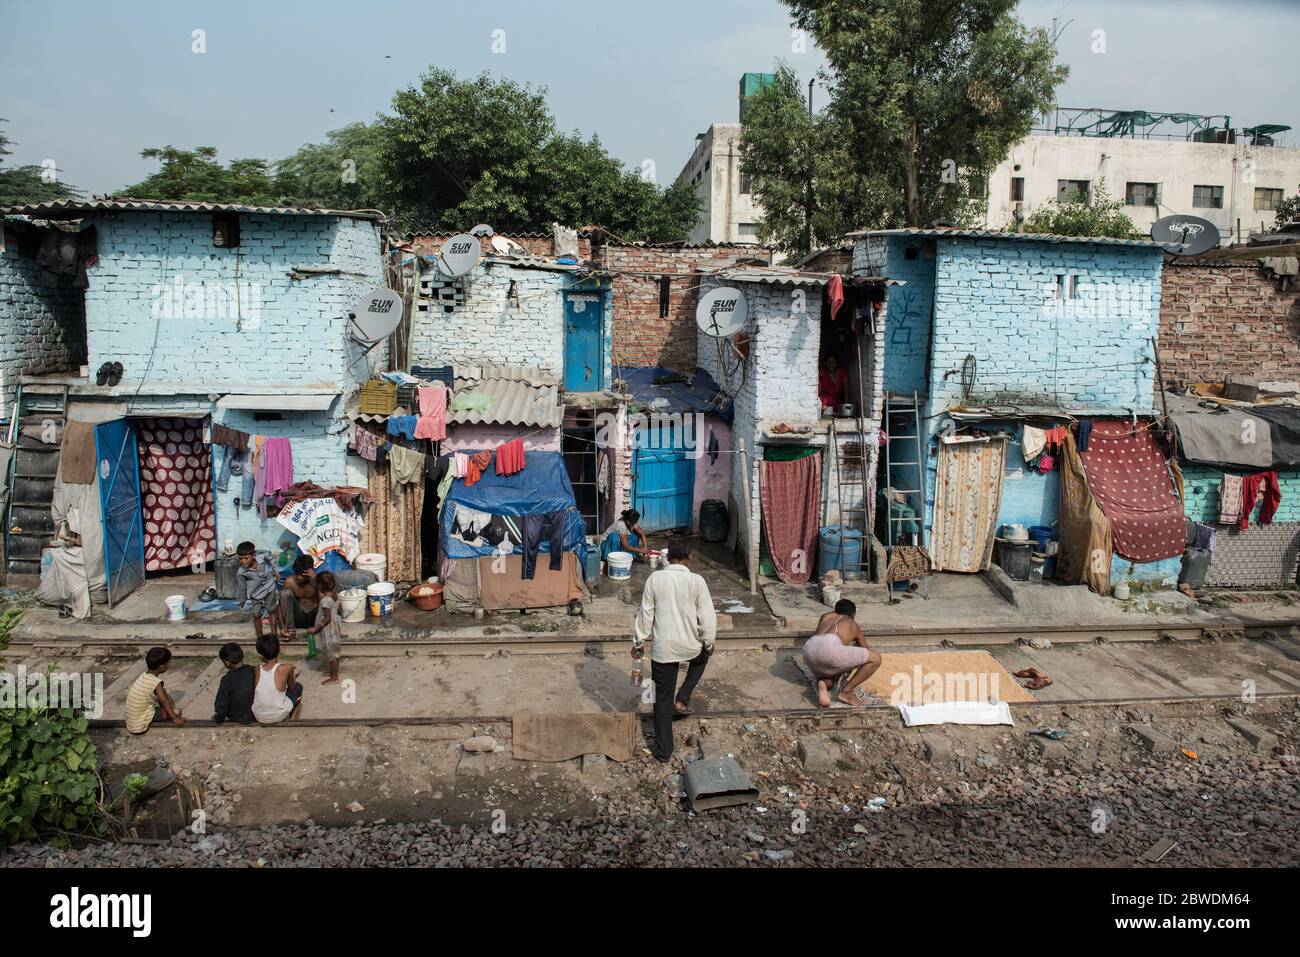 Crowded slums alongside the train tracks. New Delhi, India. India Railways. Stock Photo